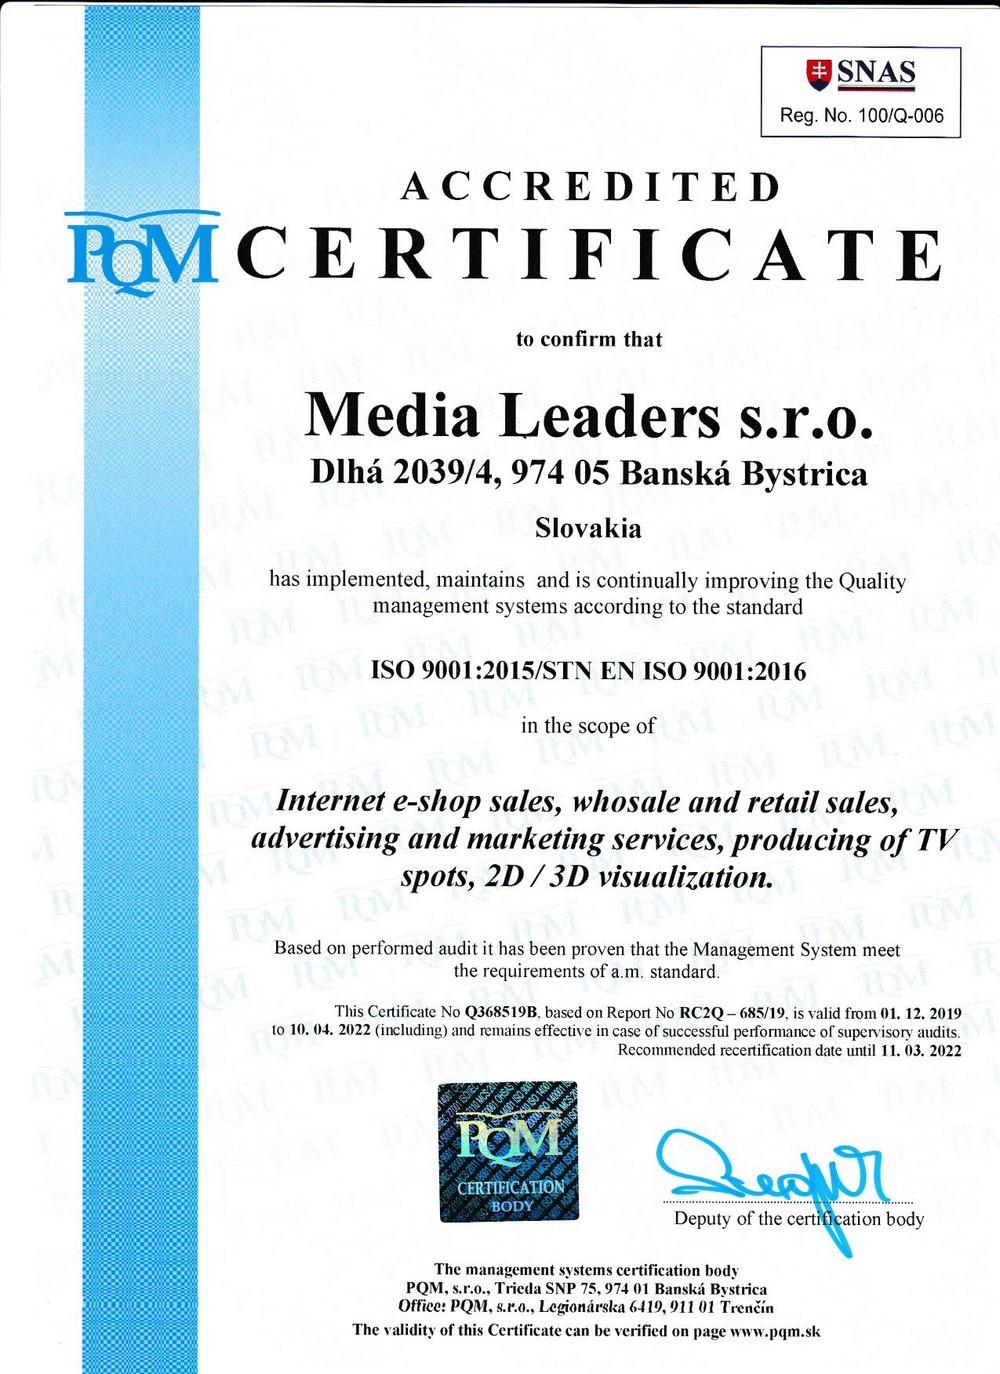 SO-certifikat media leaders